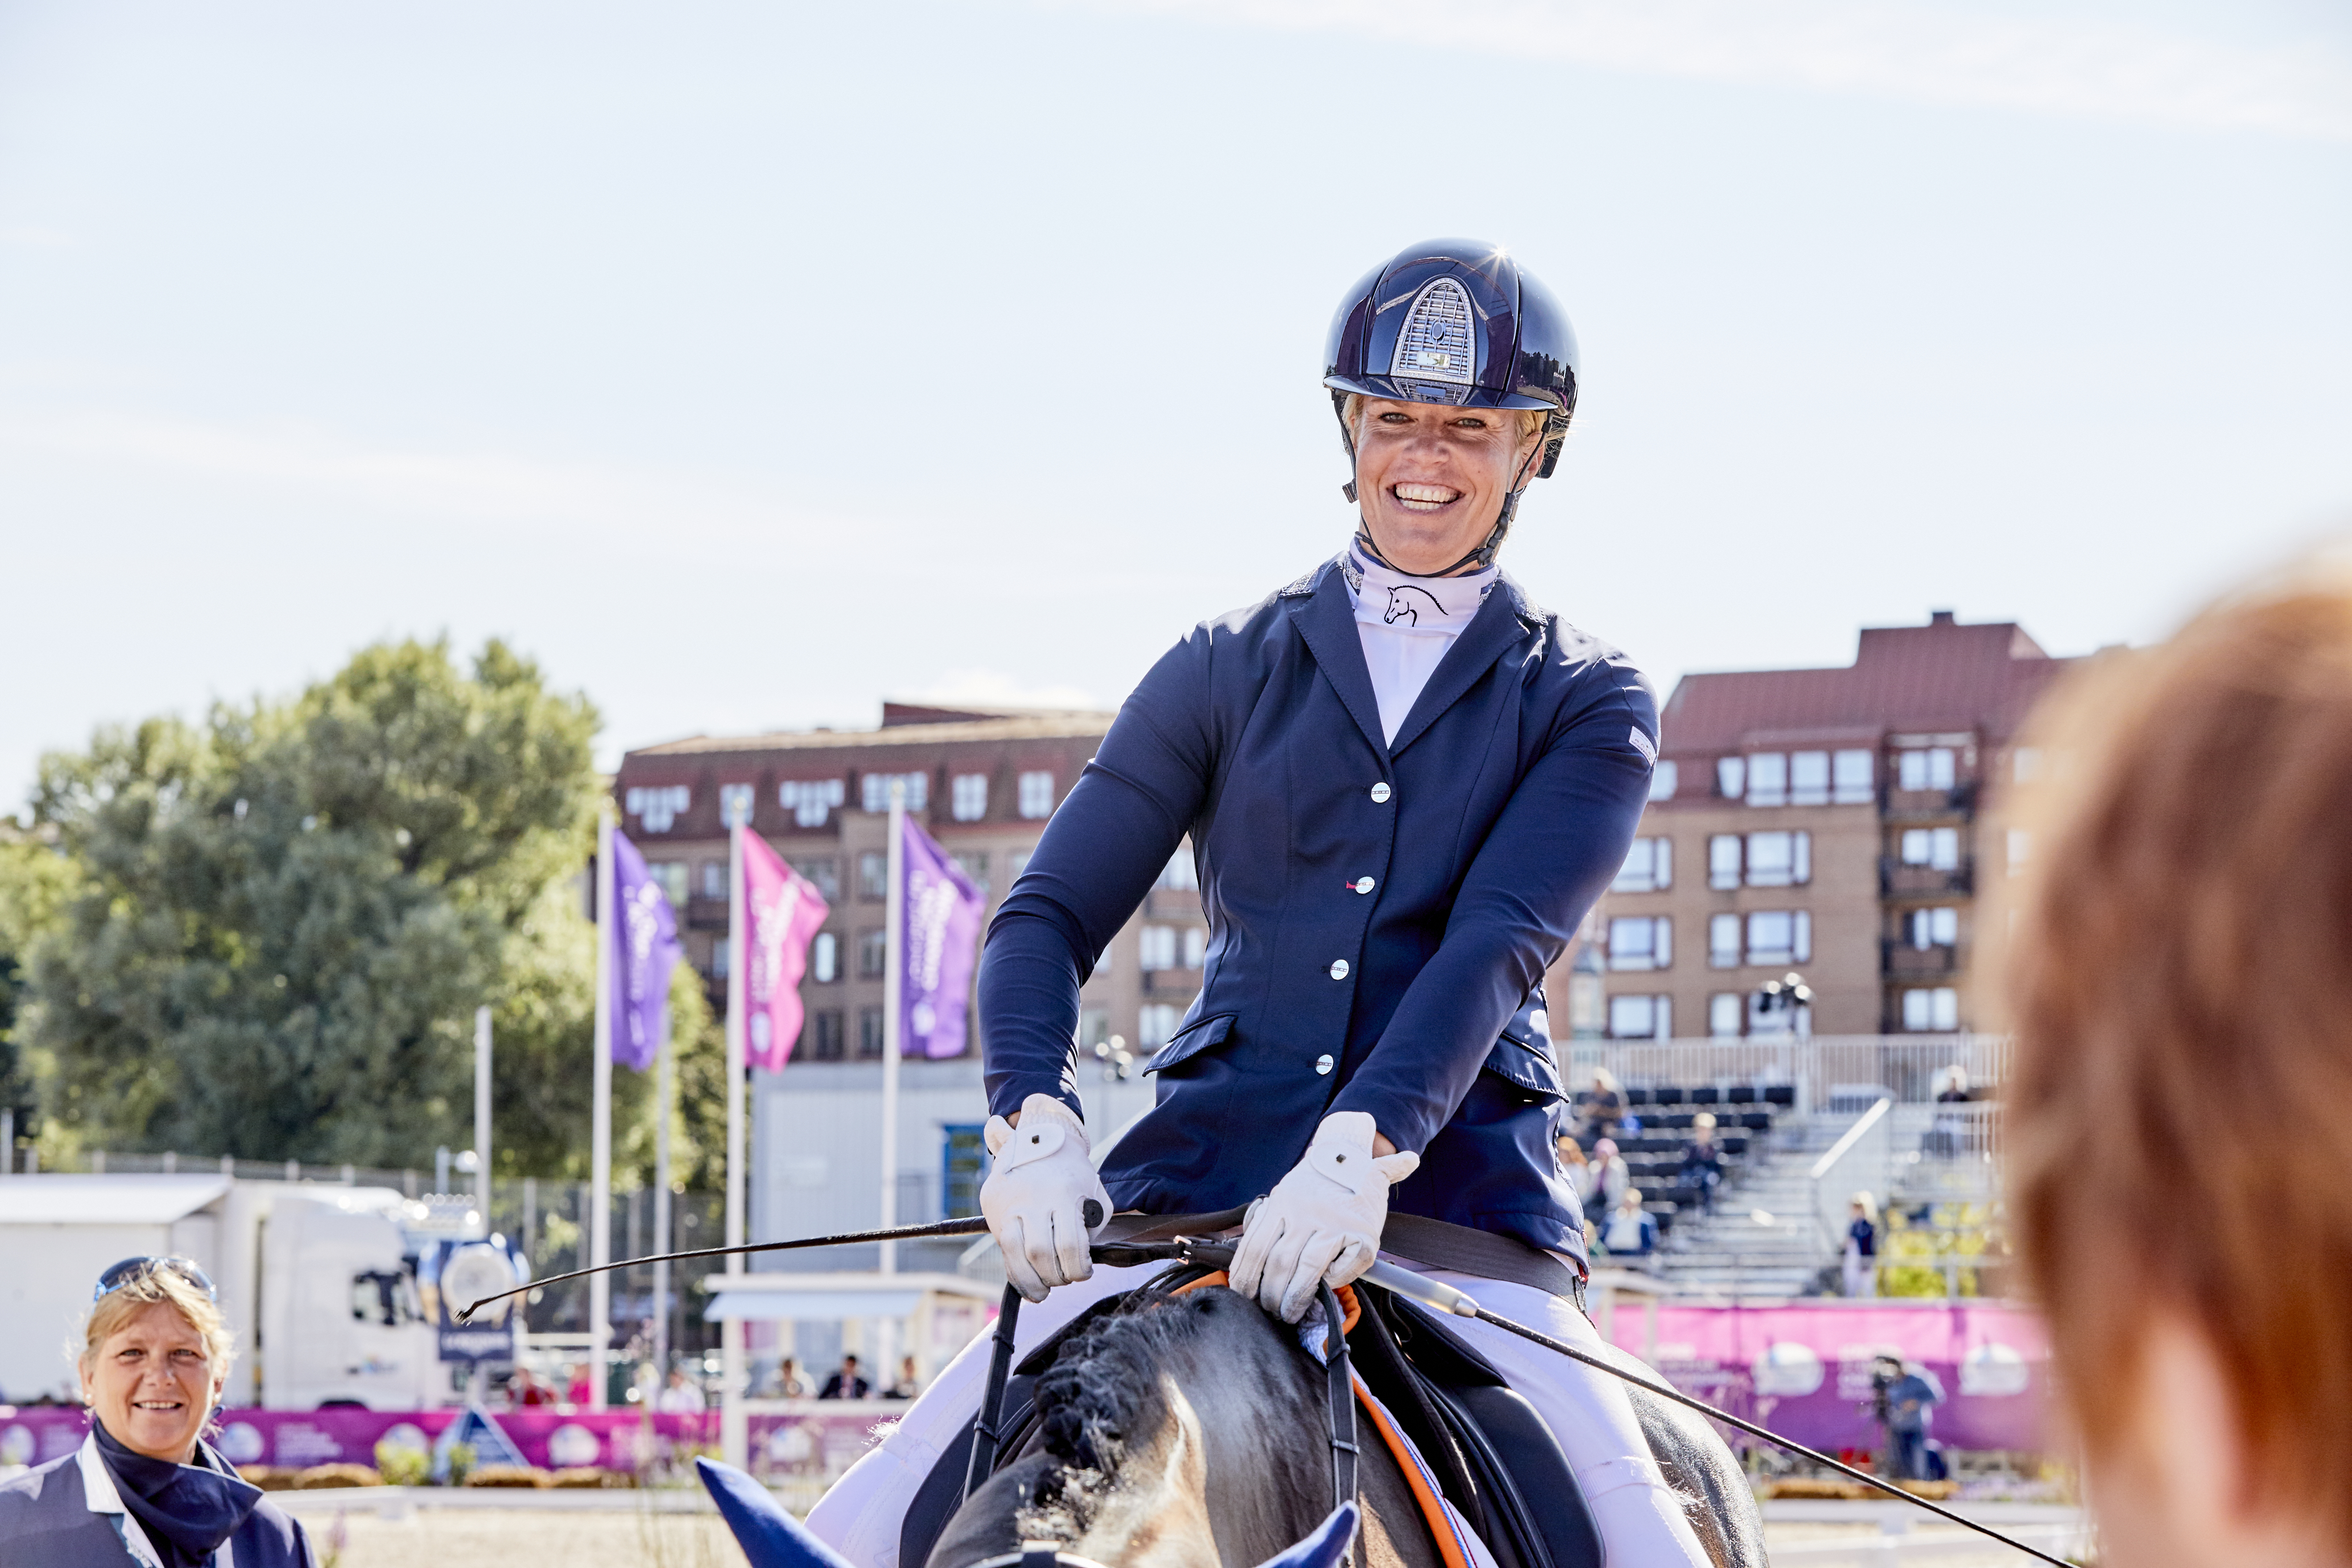 Dutch female rider smiles on her horse